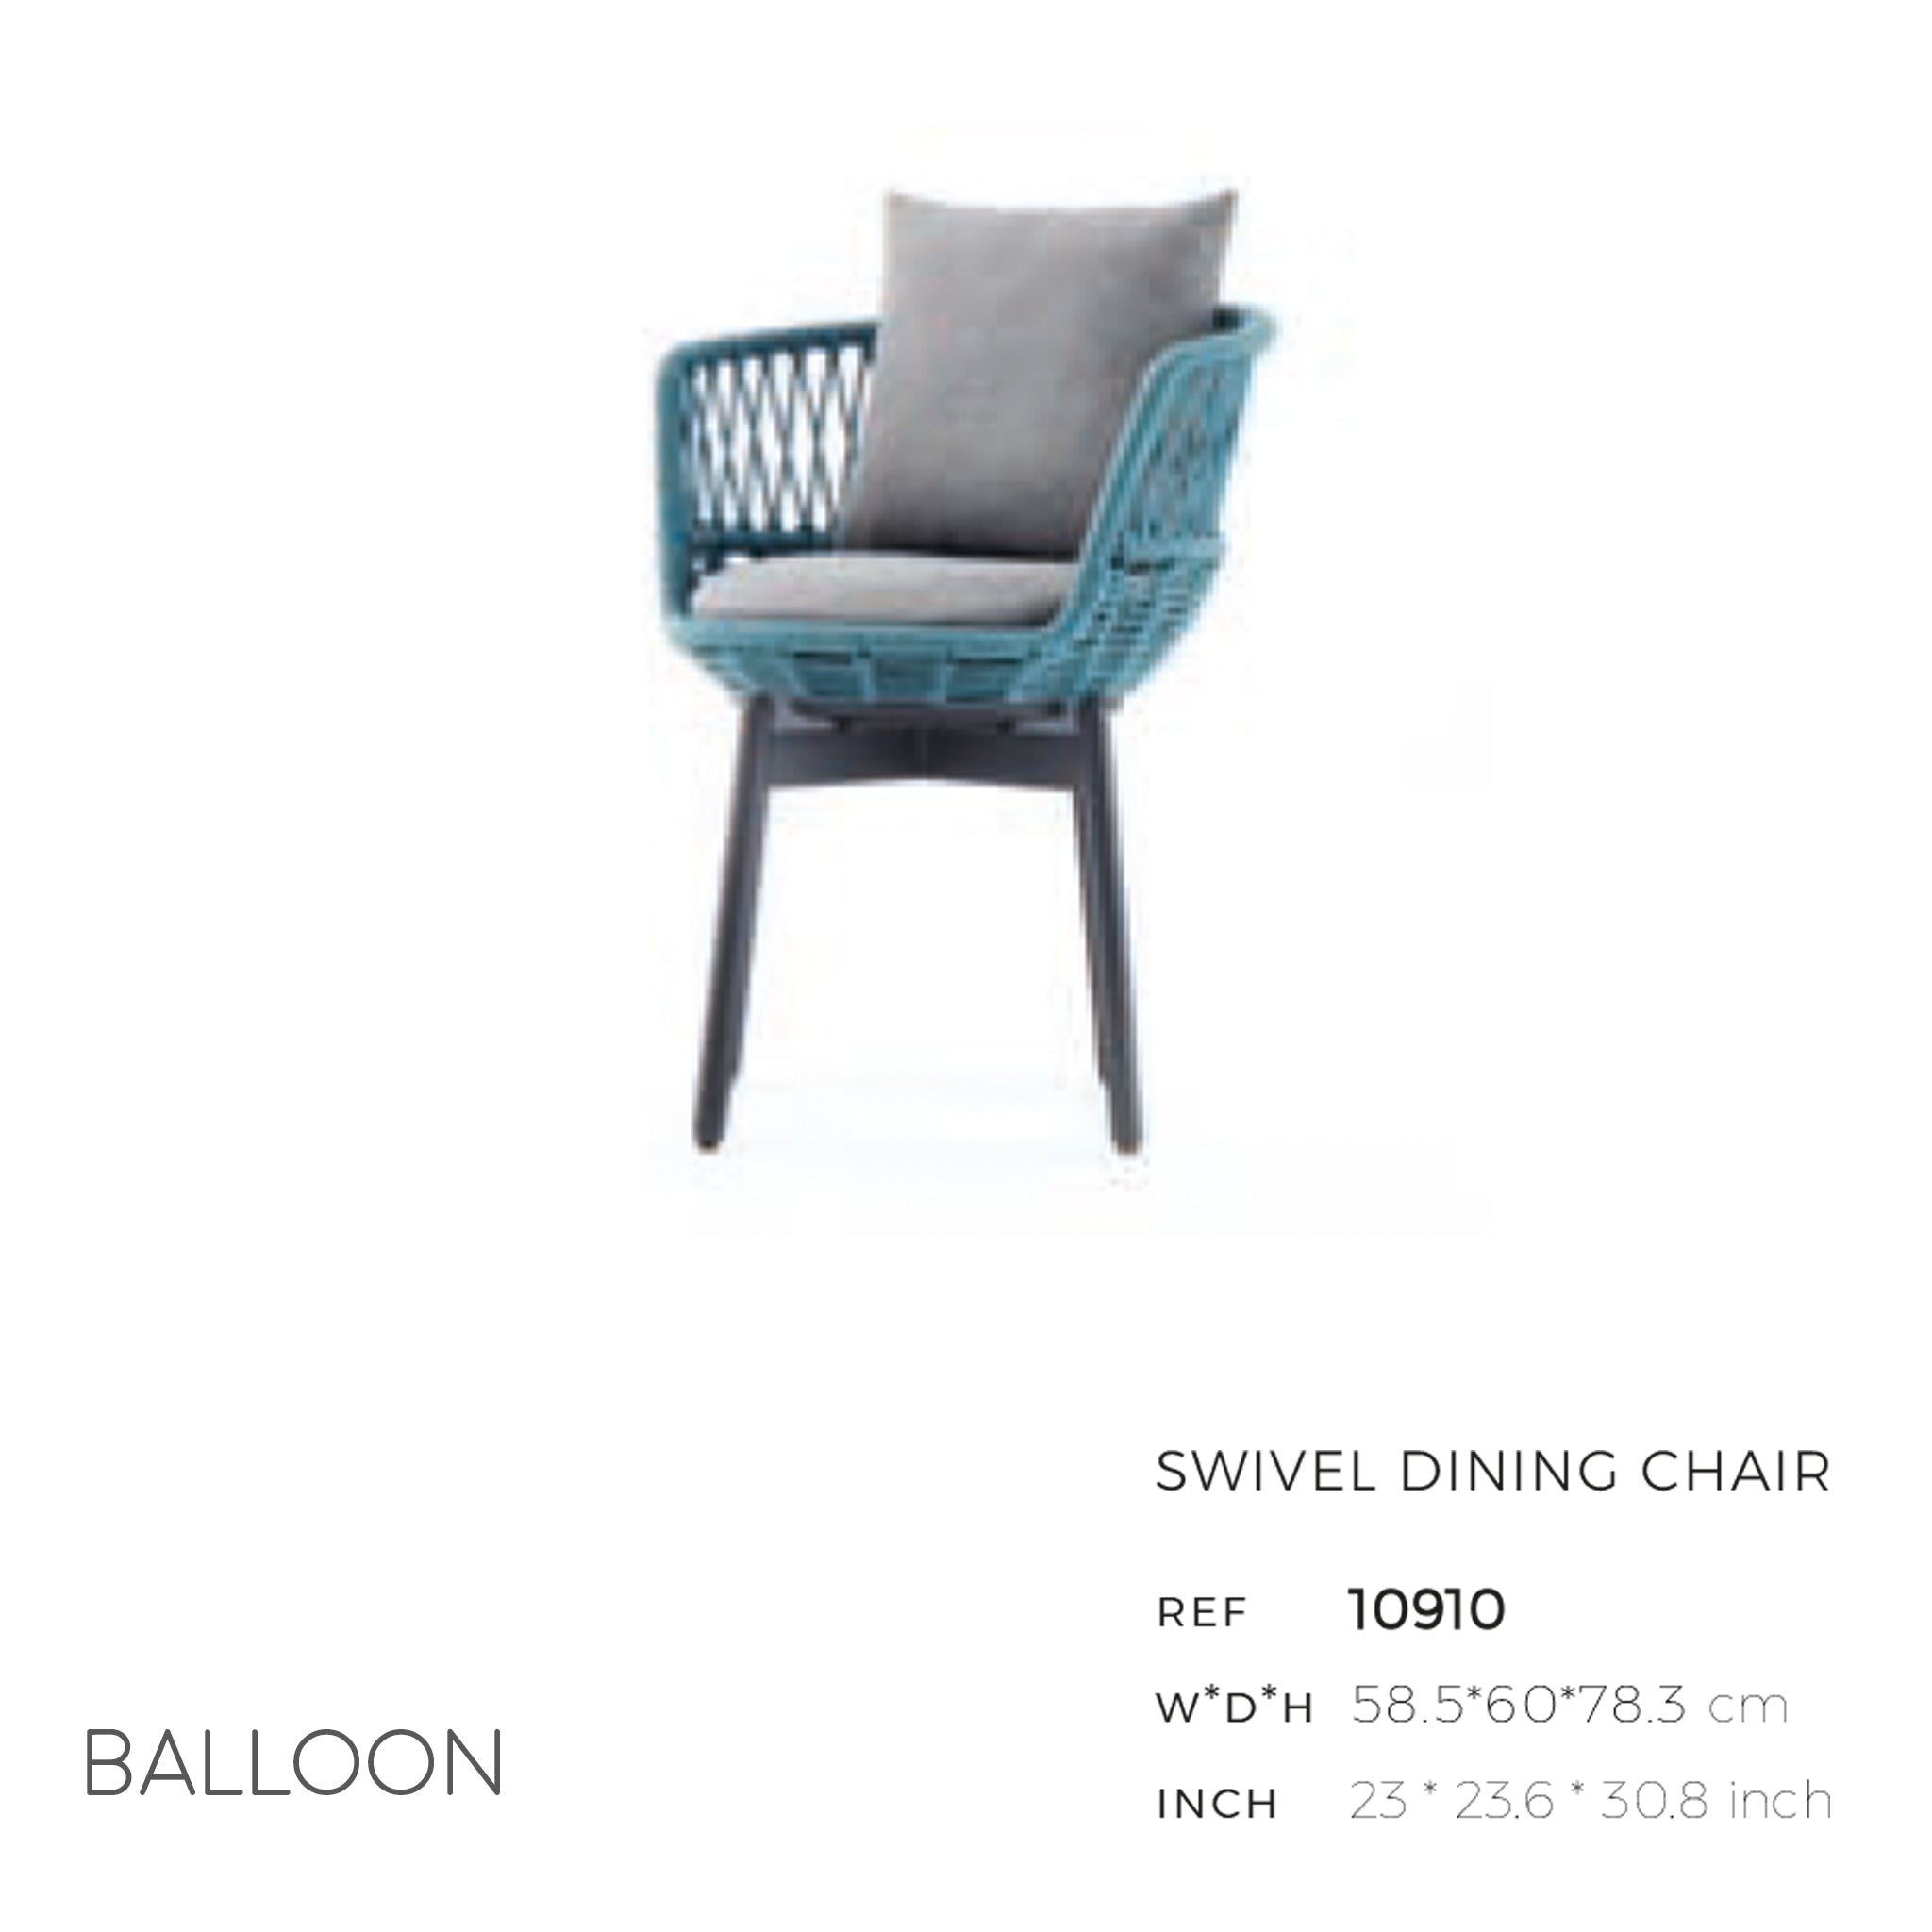 Balloon Dining Chair